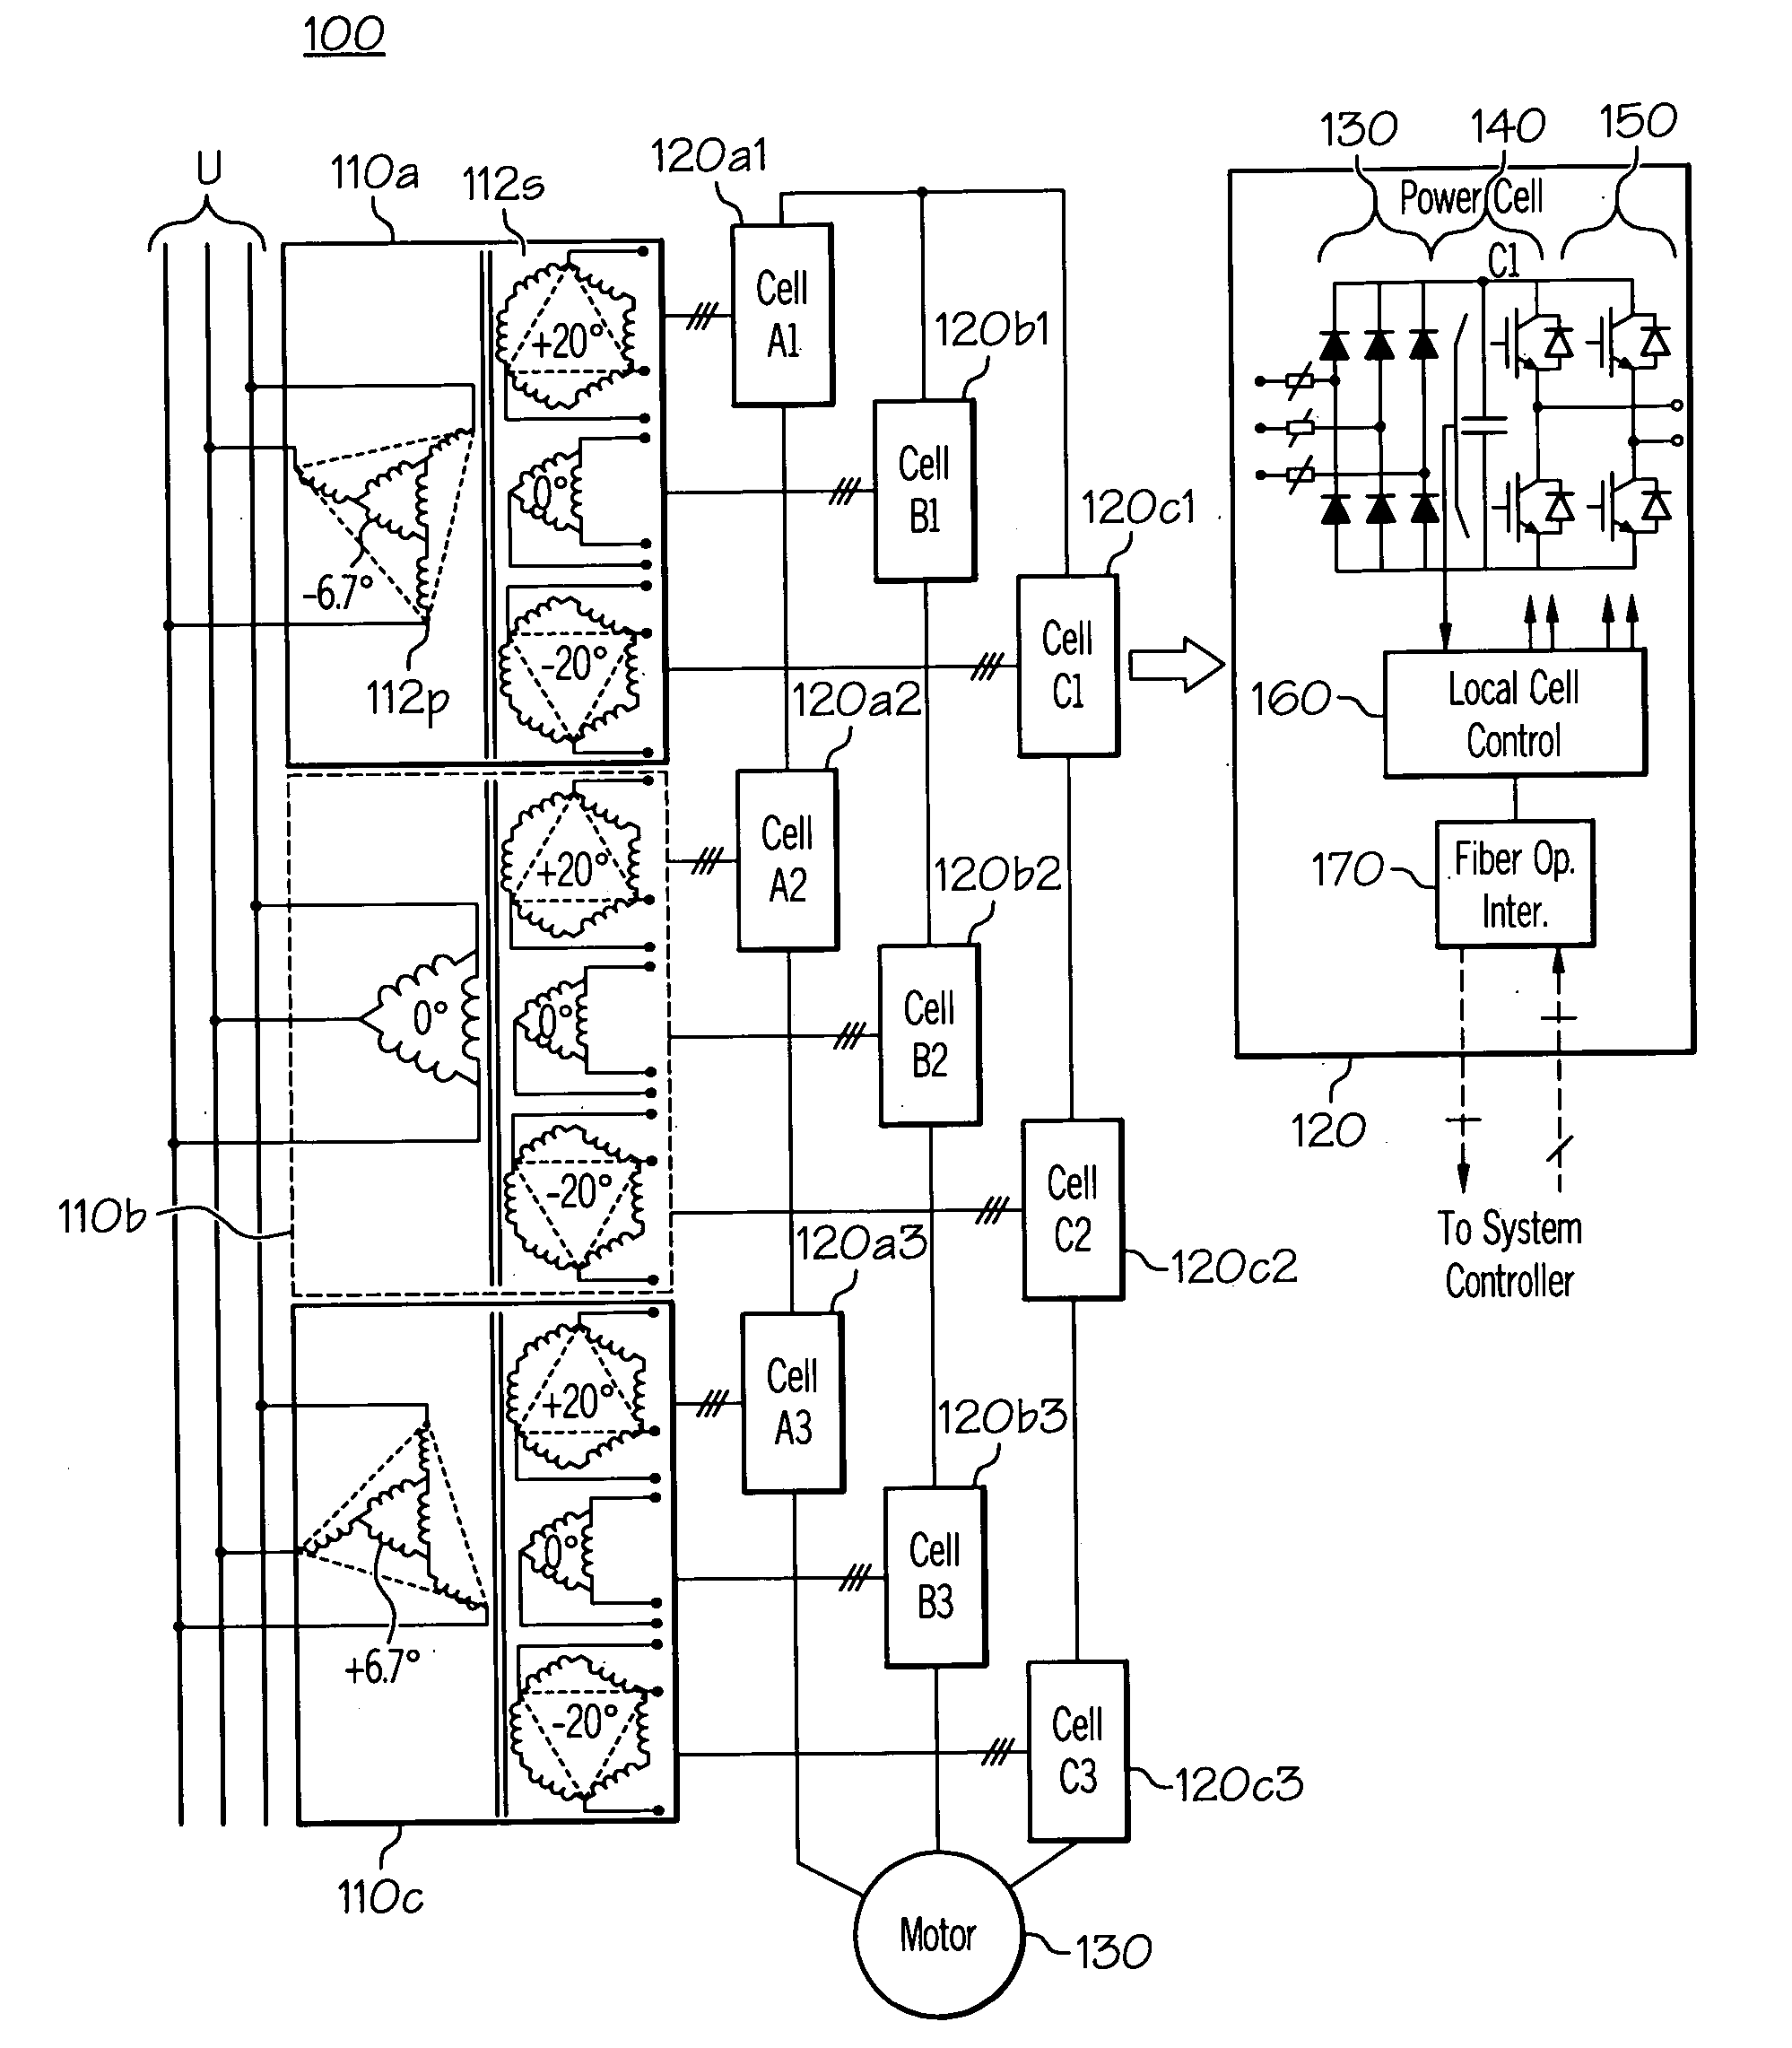 Modular multi-pulse transformer rectifier for use in symmetric Multi-level power converter